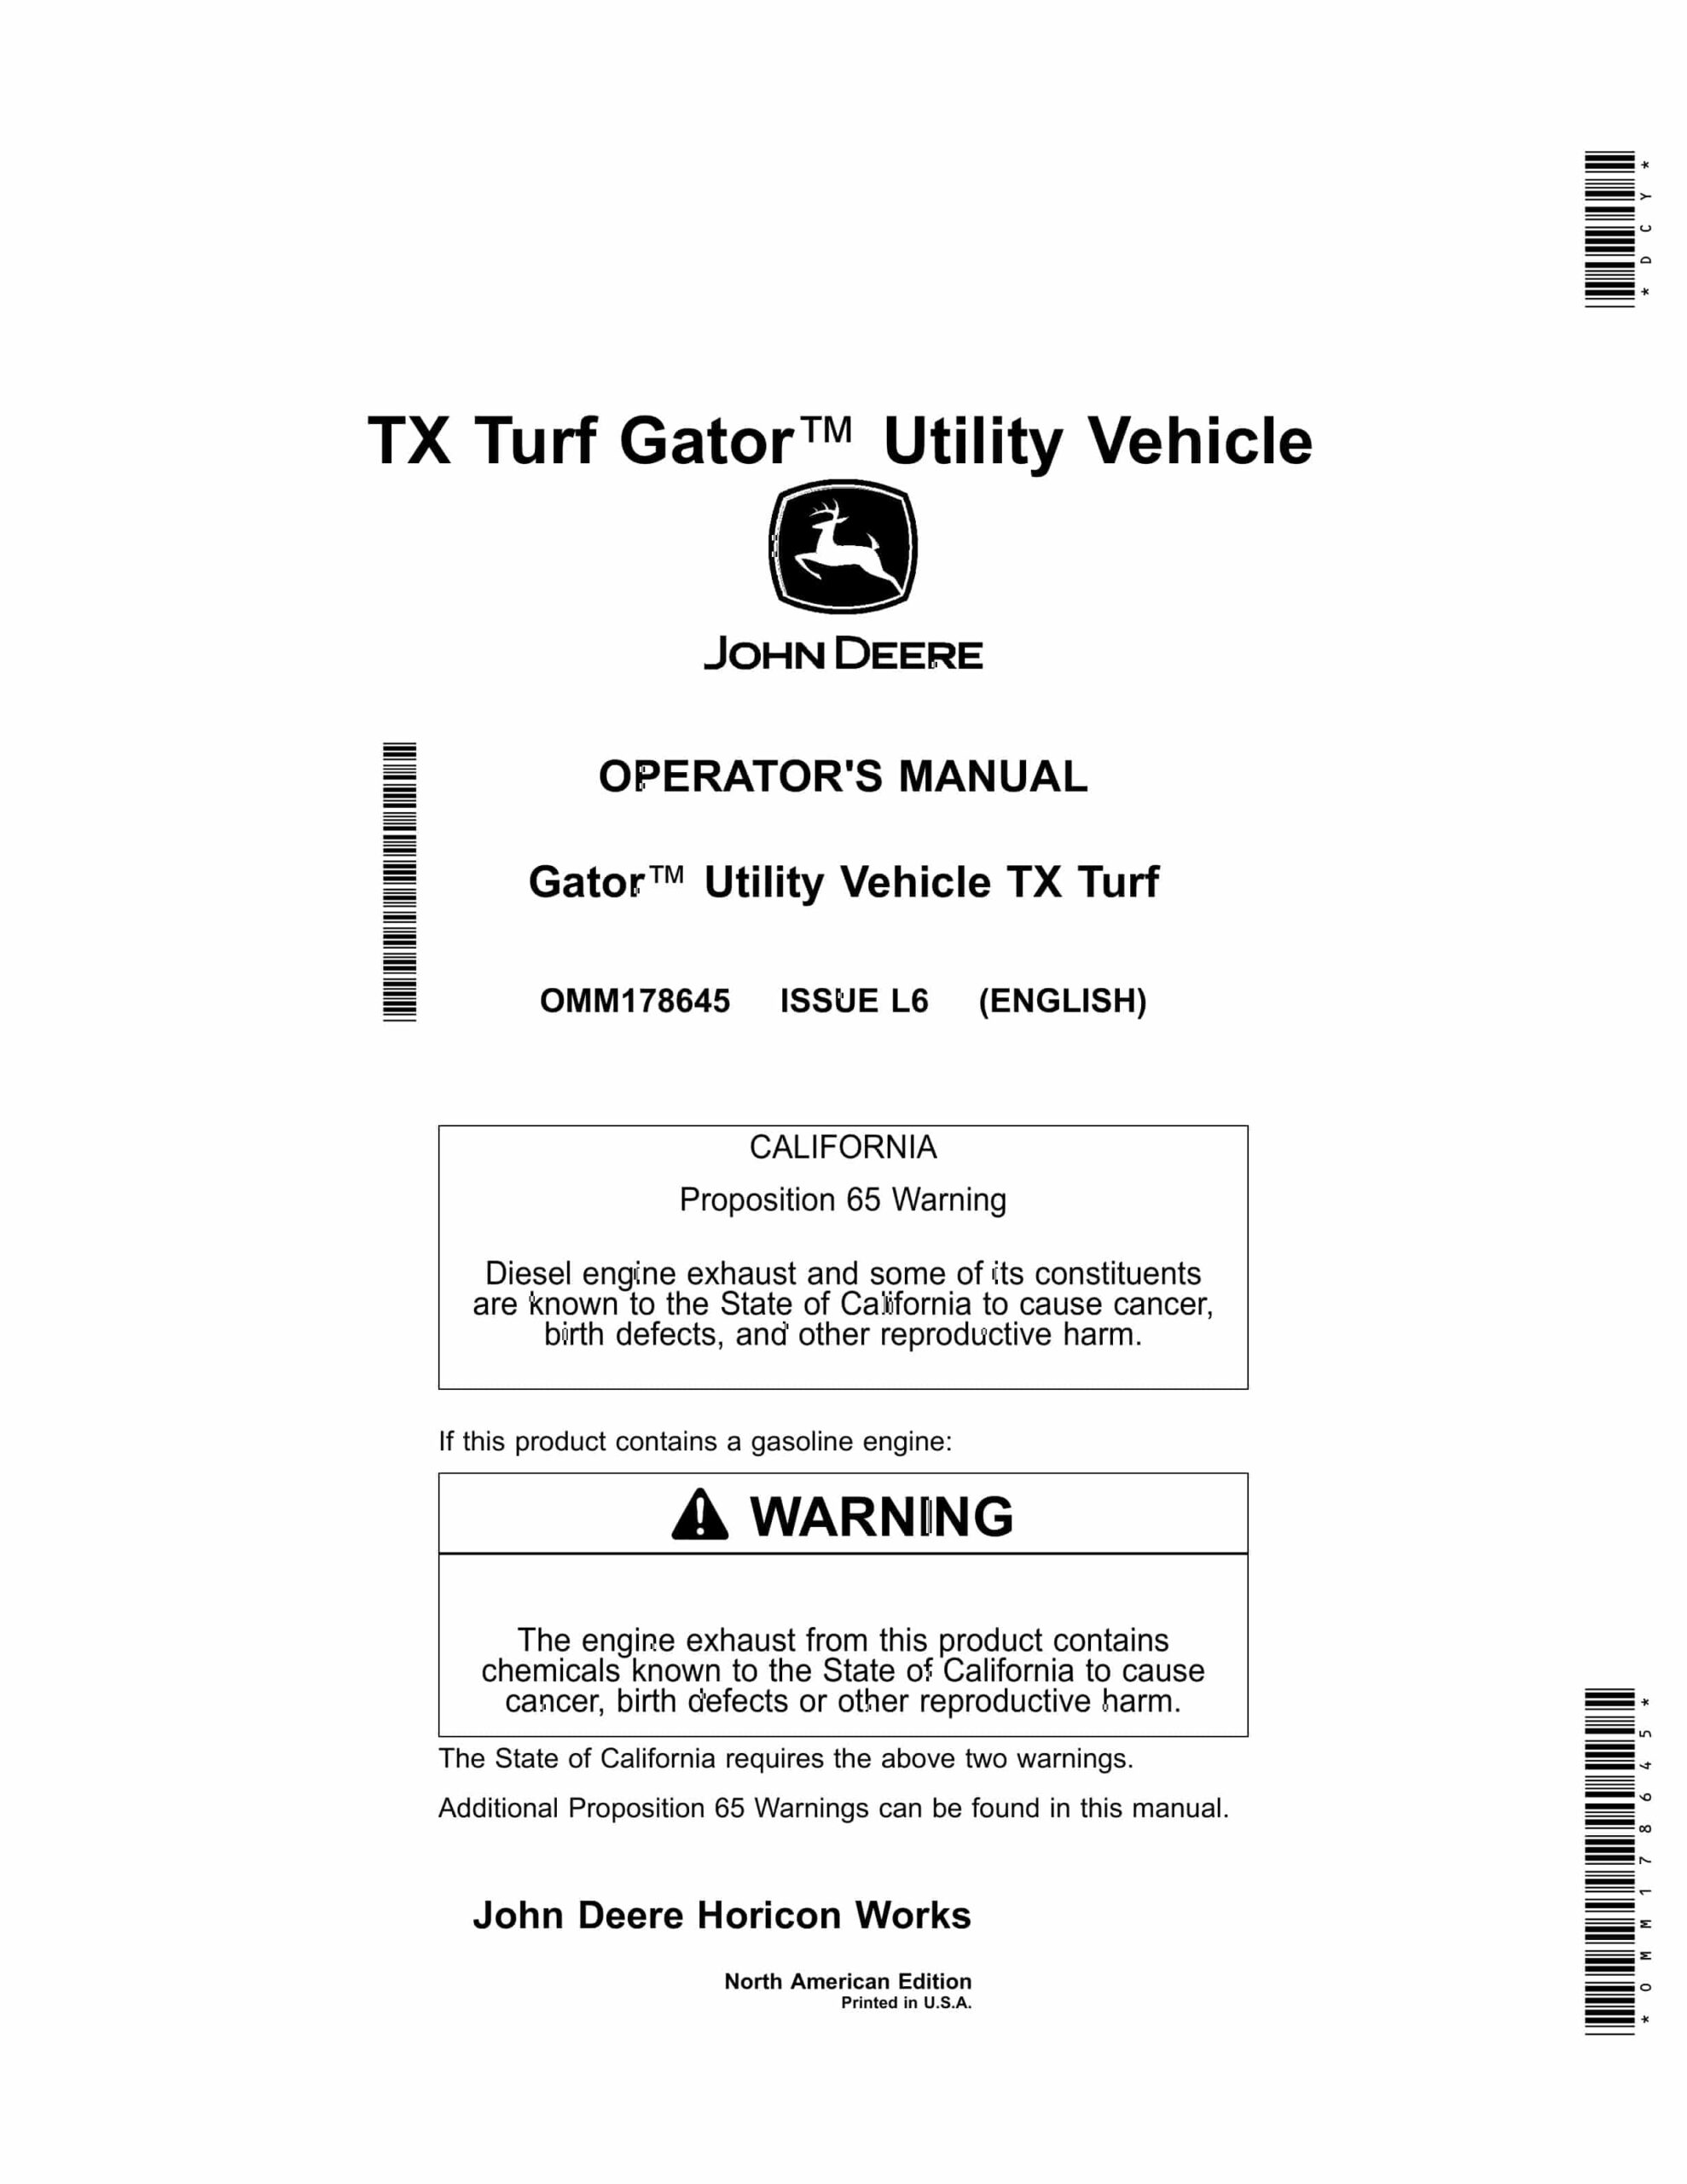 John Deere TX Turf Gator Utility Vehicles Operator Manual OMM178645-1